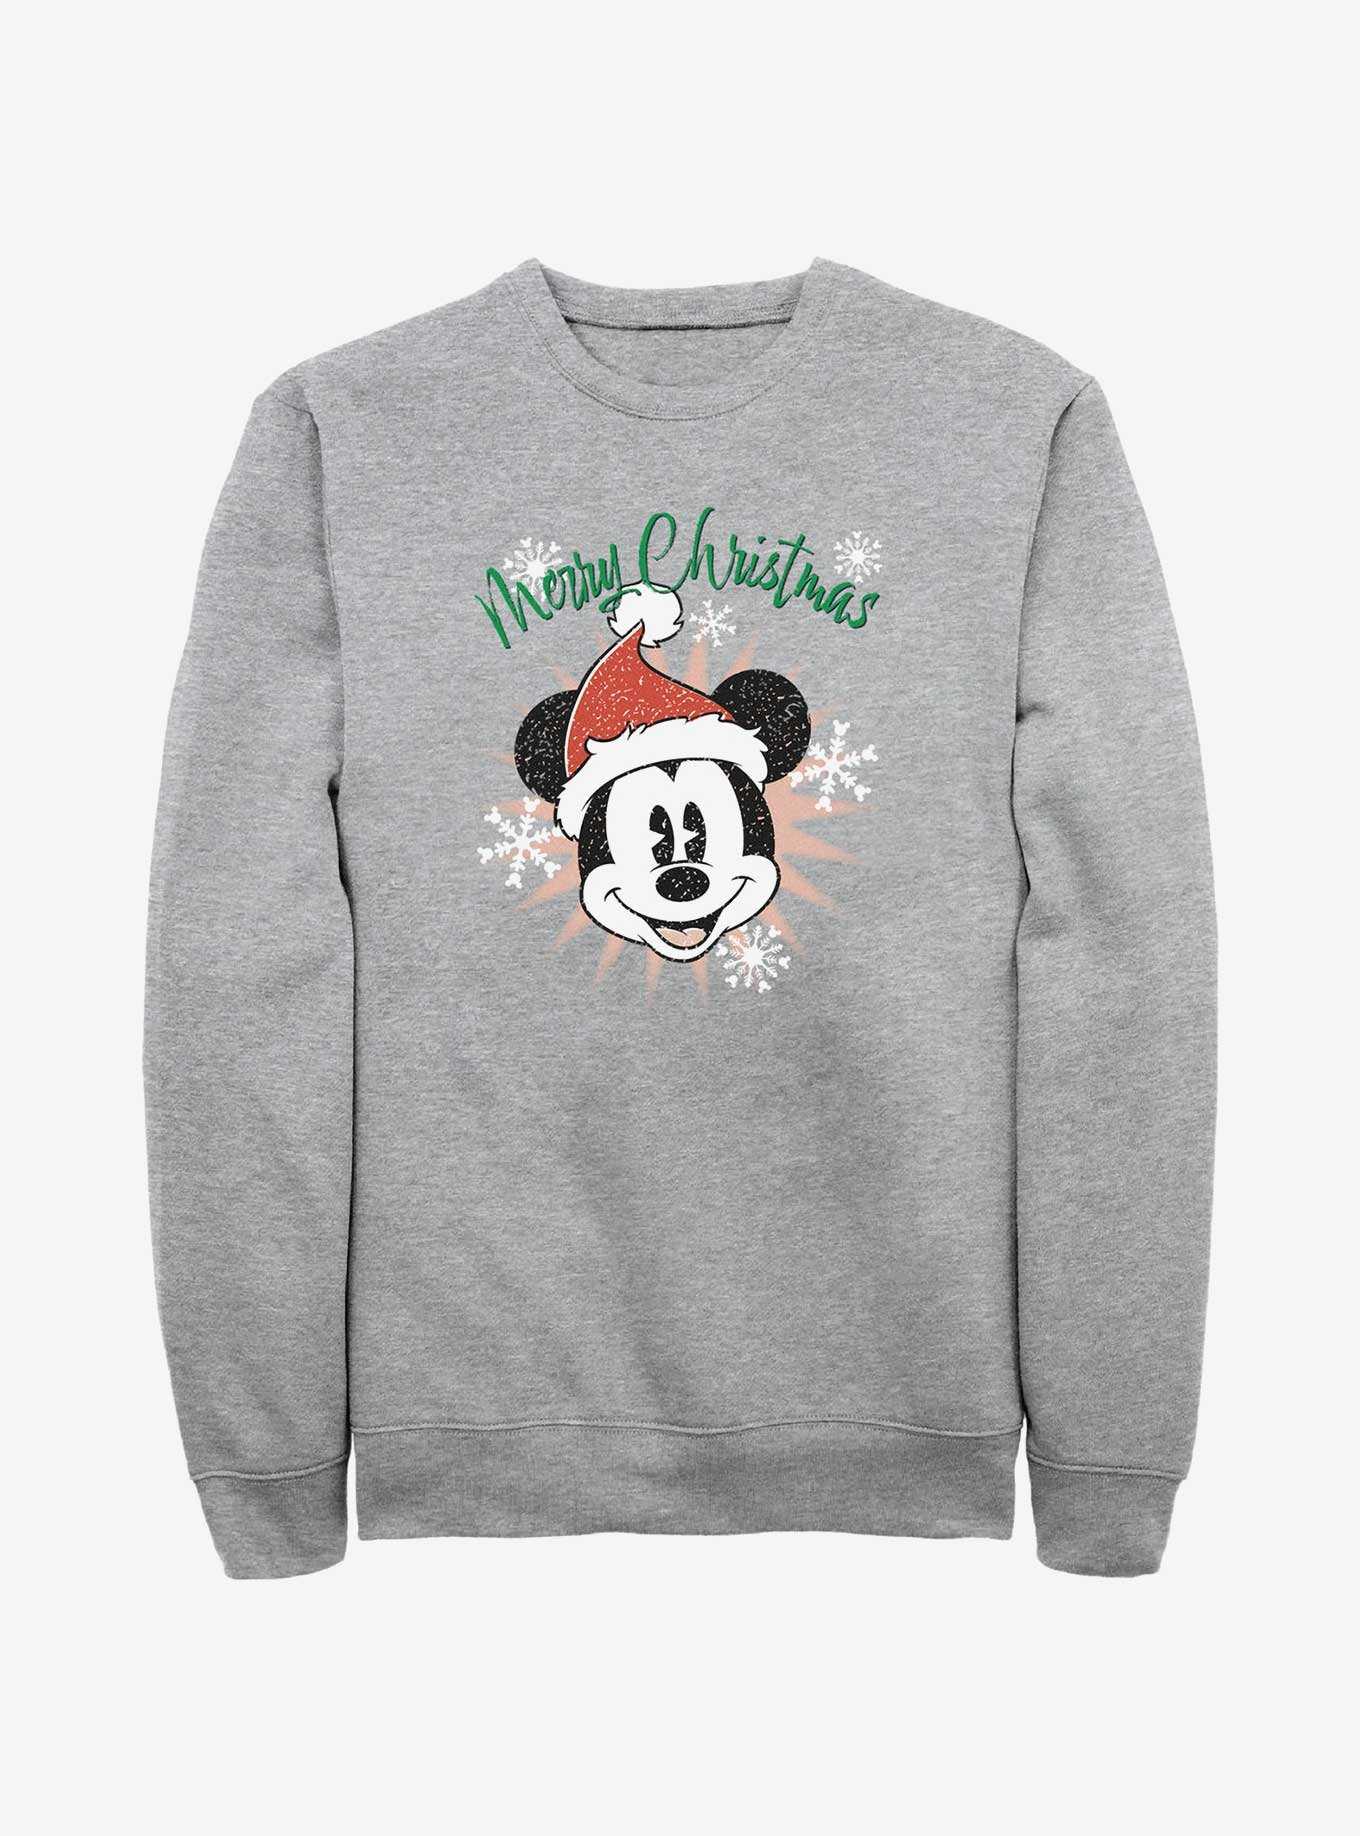 Disney Mickey Mouse Snowflakes Santa Mickey Sweatshirt, , hi-res